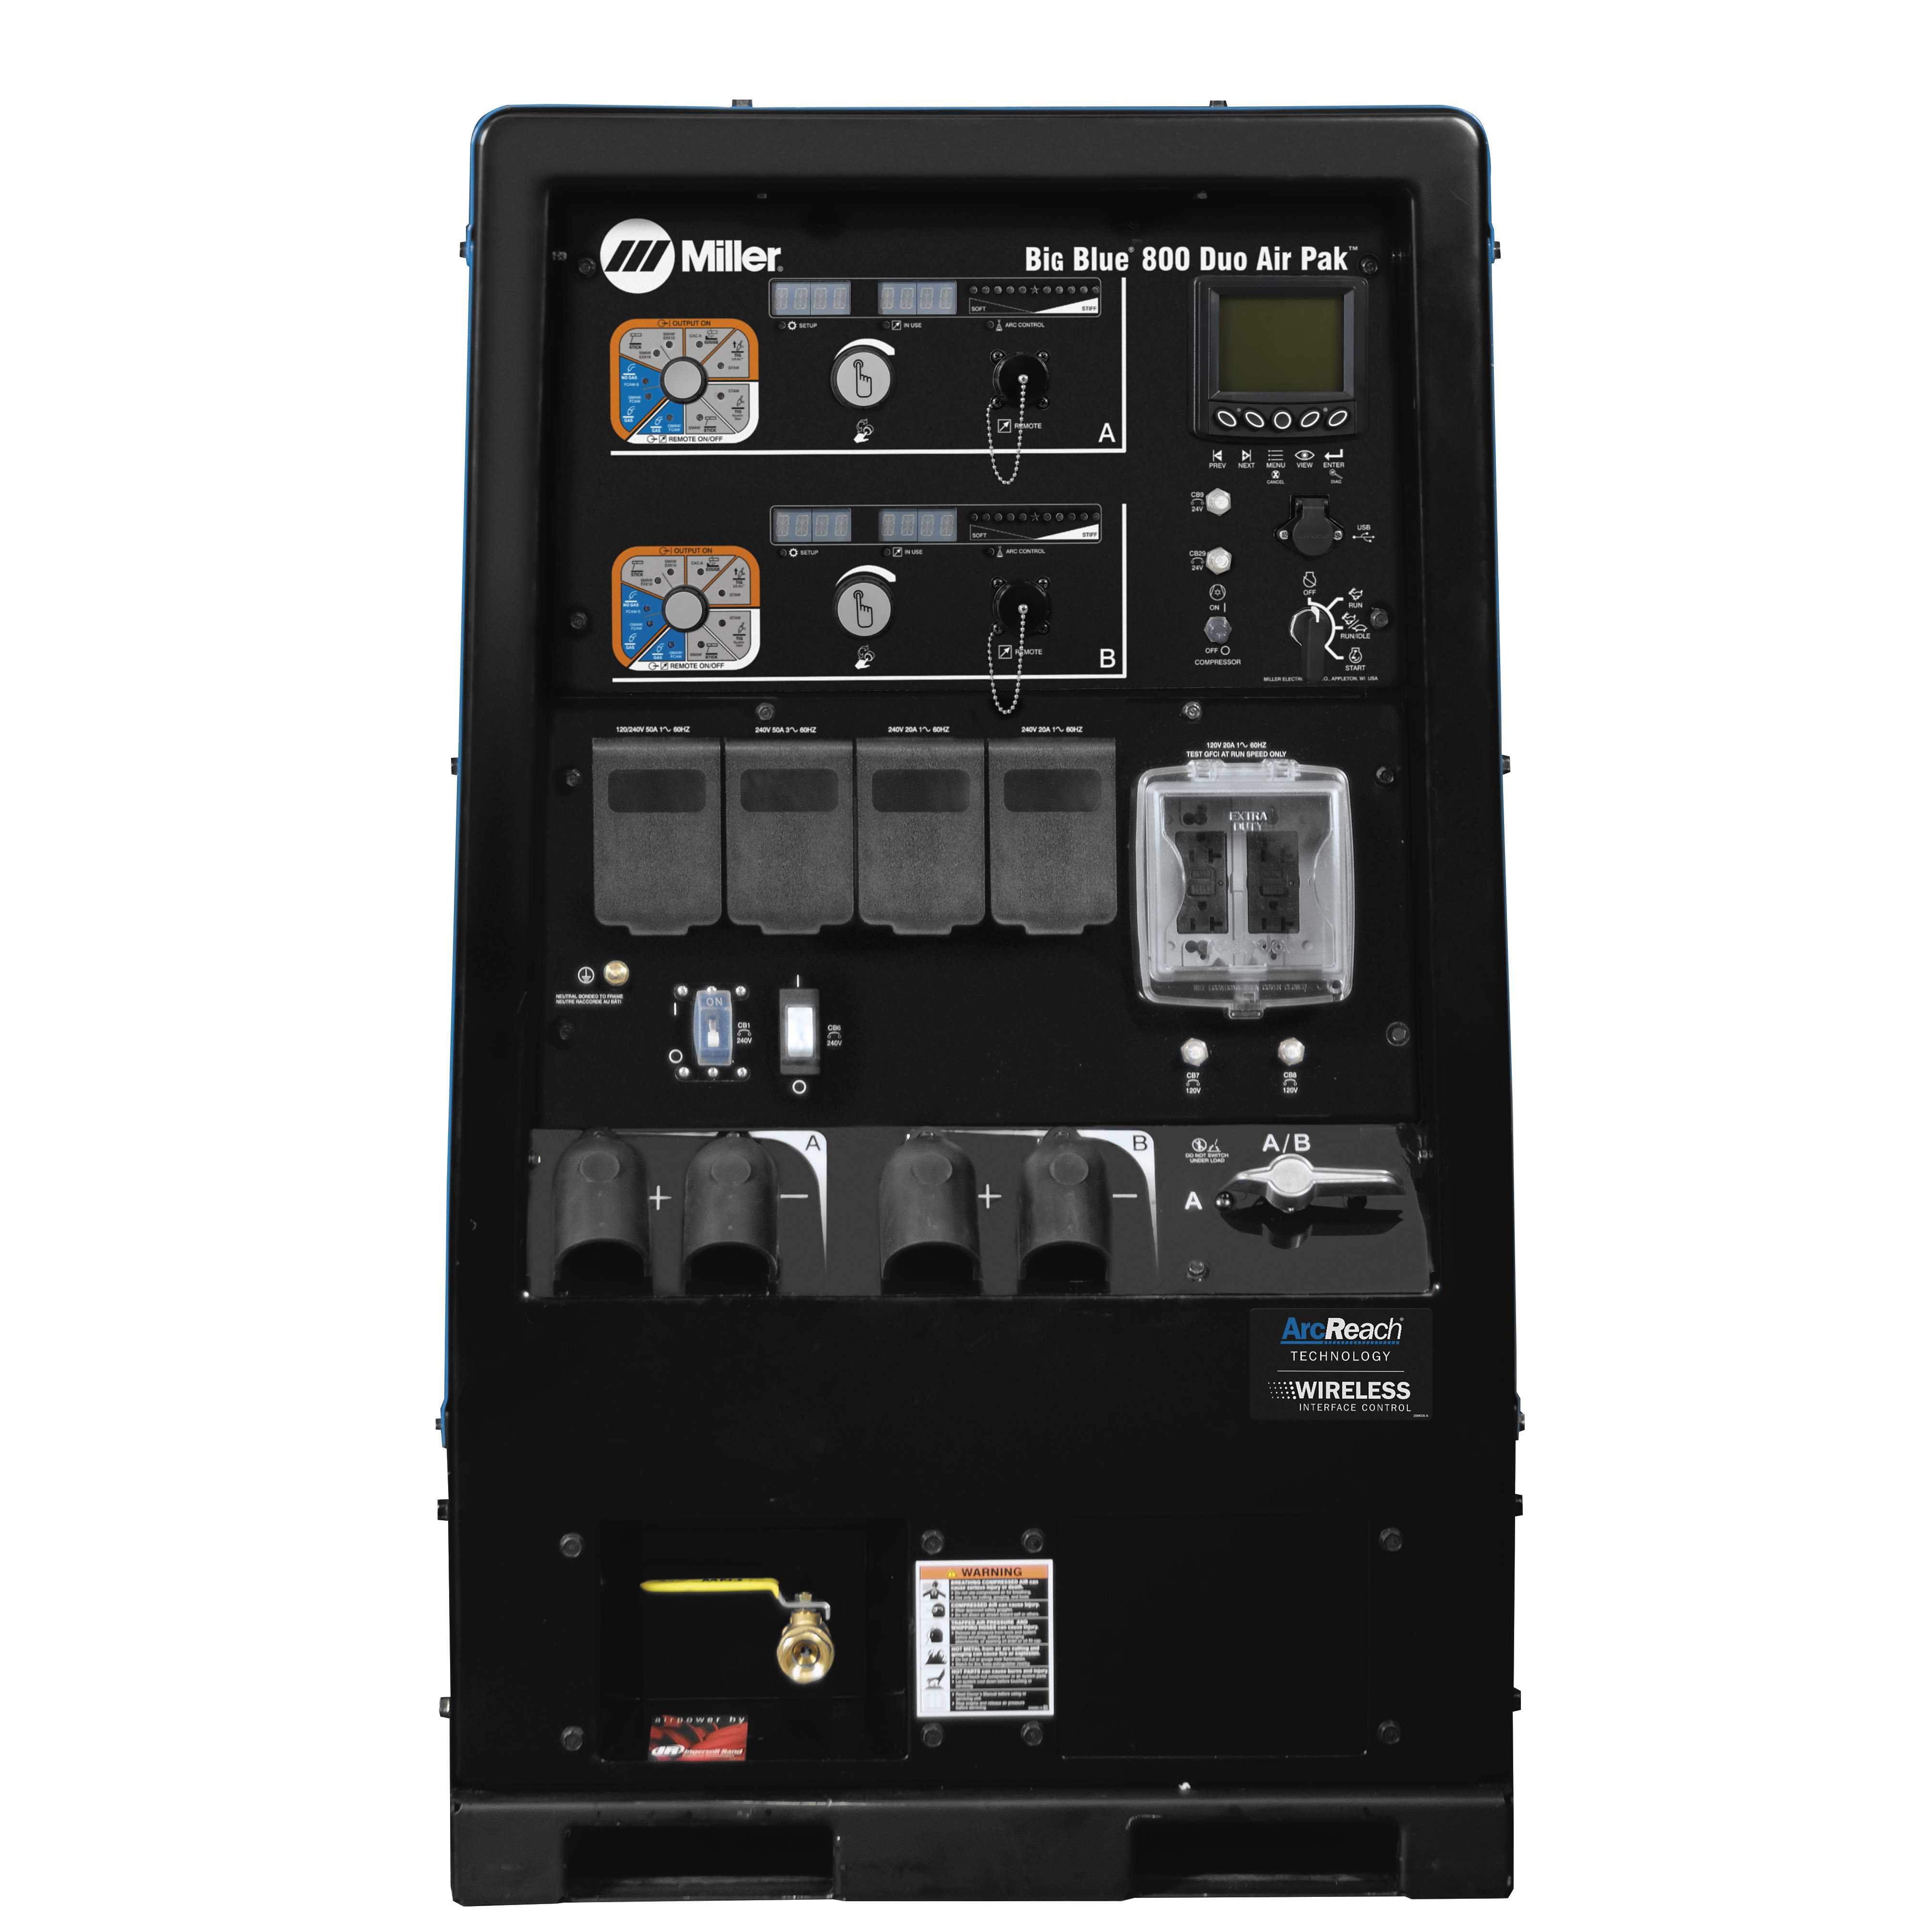 Big Blue® 800 Duo Air Pak™ Truck Mount Spec w/Wireless Interface 